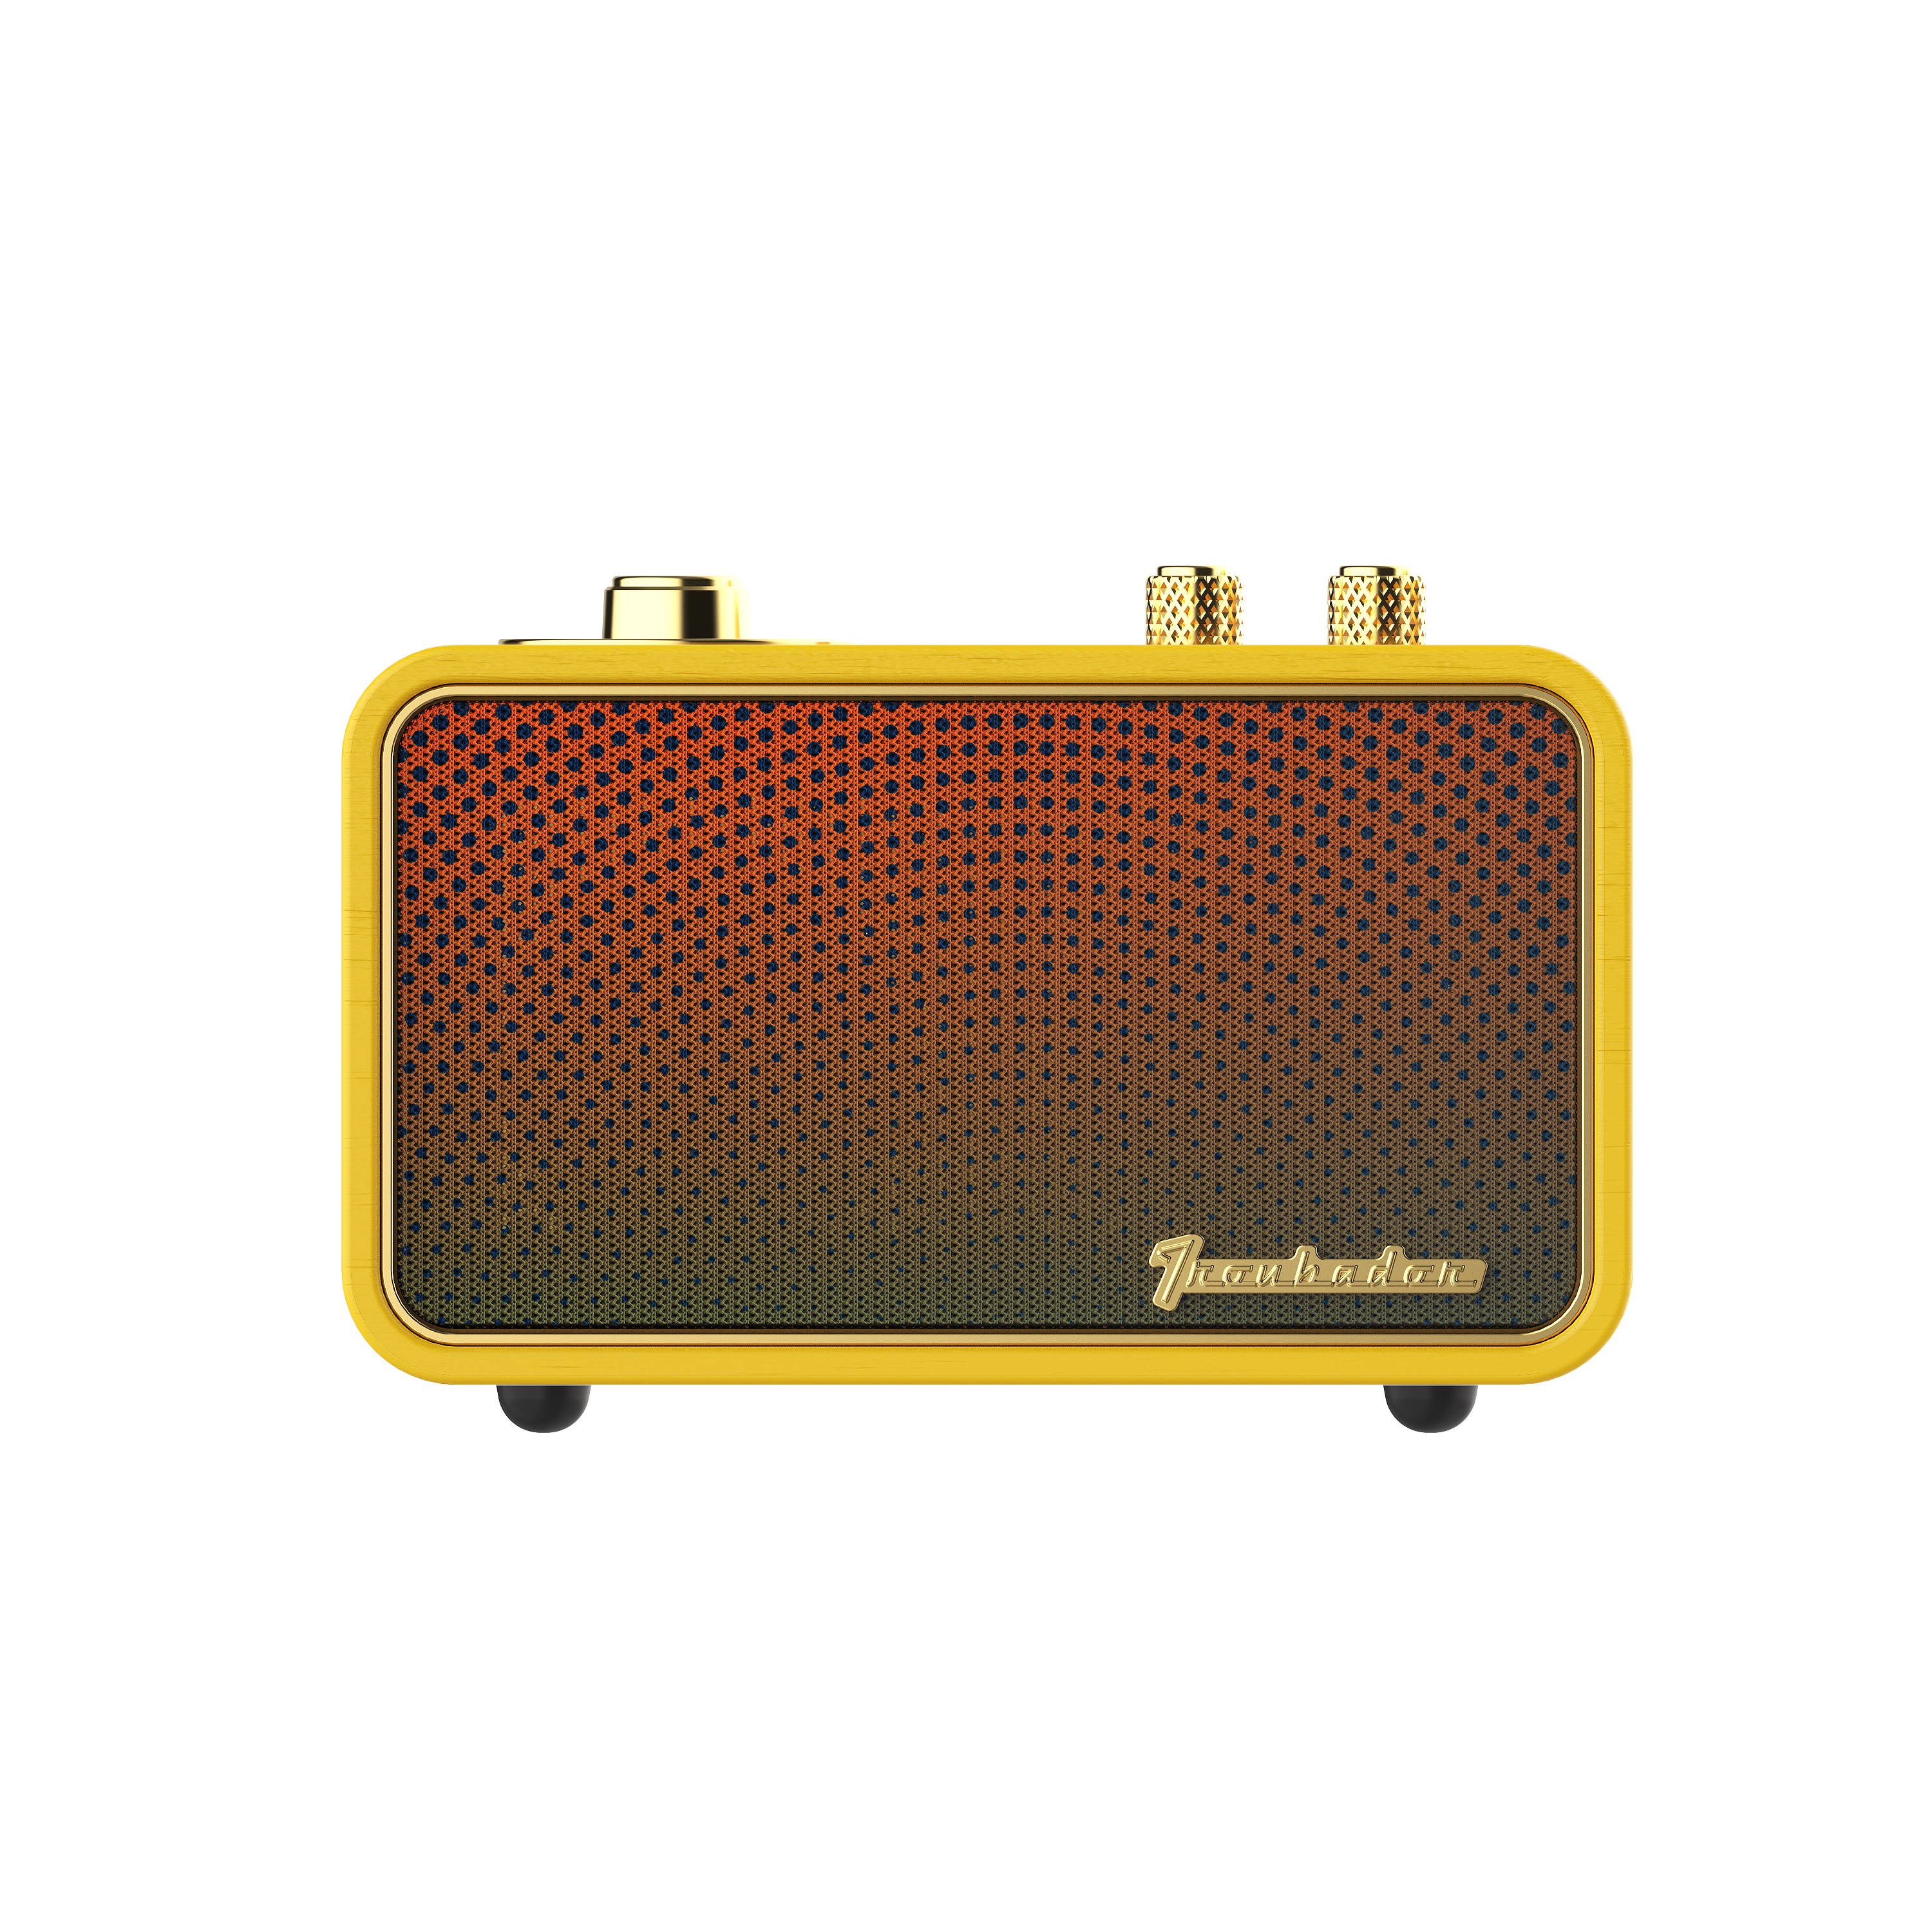 Trenbader Artlink Stereo Bluetooth Speaker with FM/AM Radio